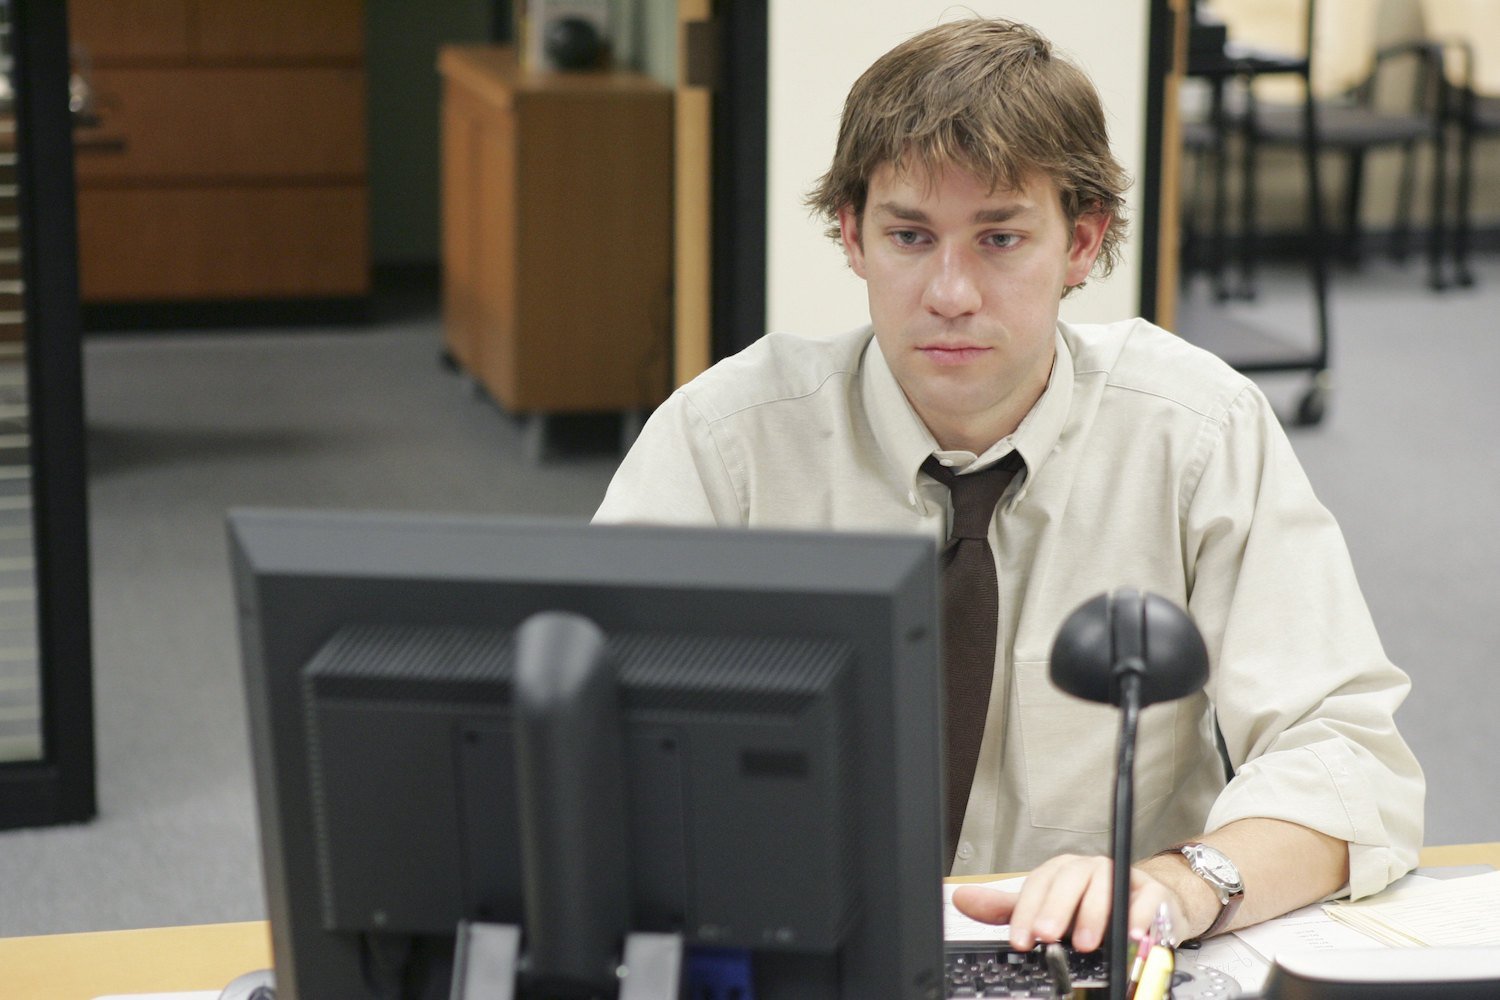 'The Office' star John Krasinski sits at a desk as Jim Halpert